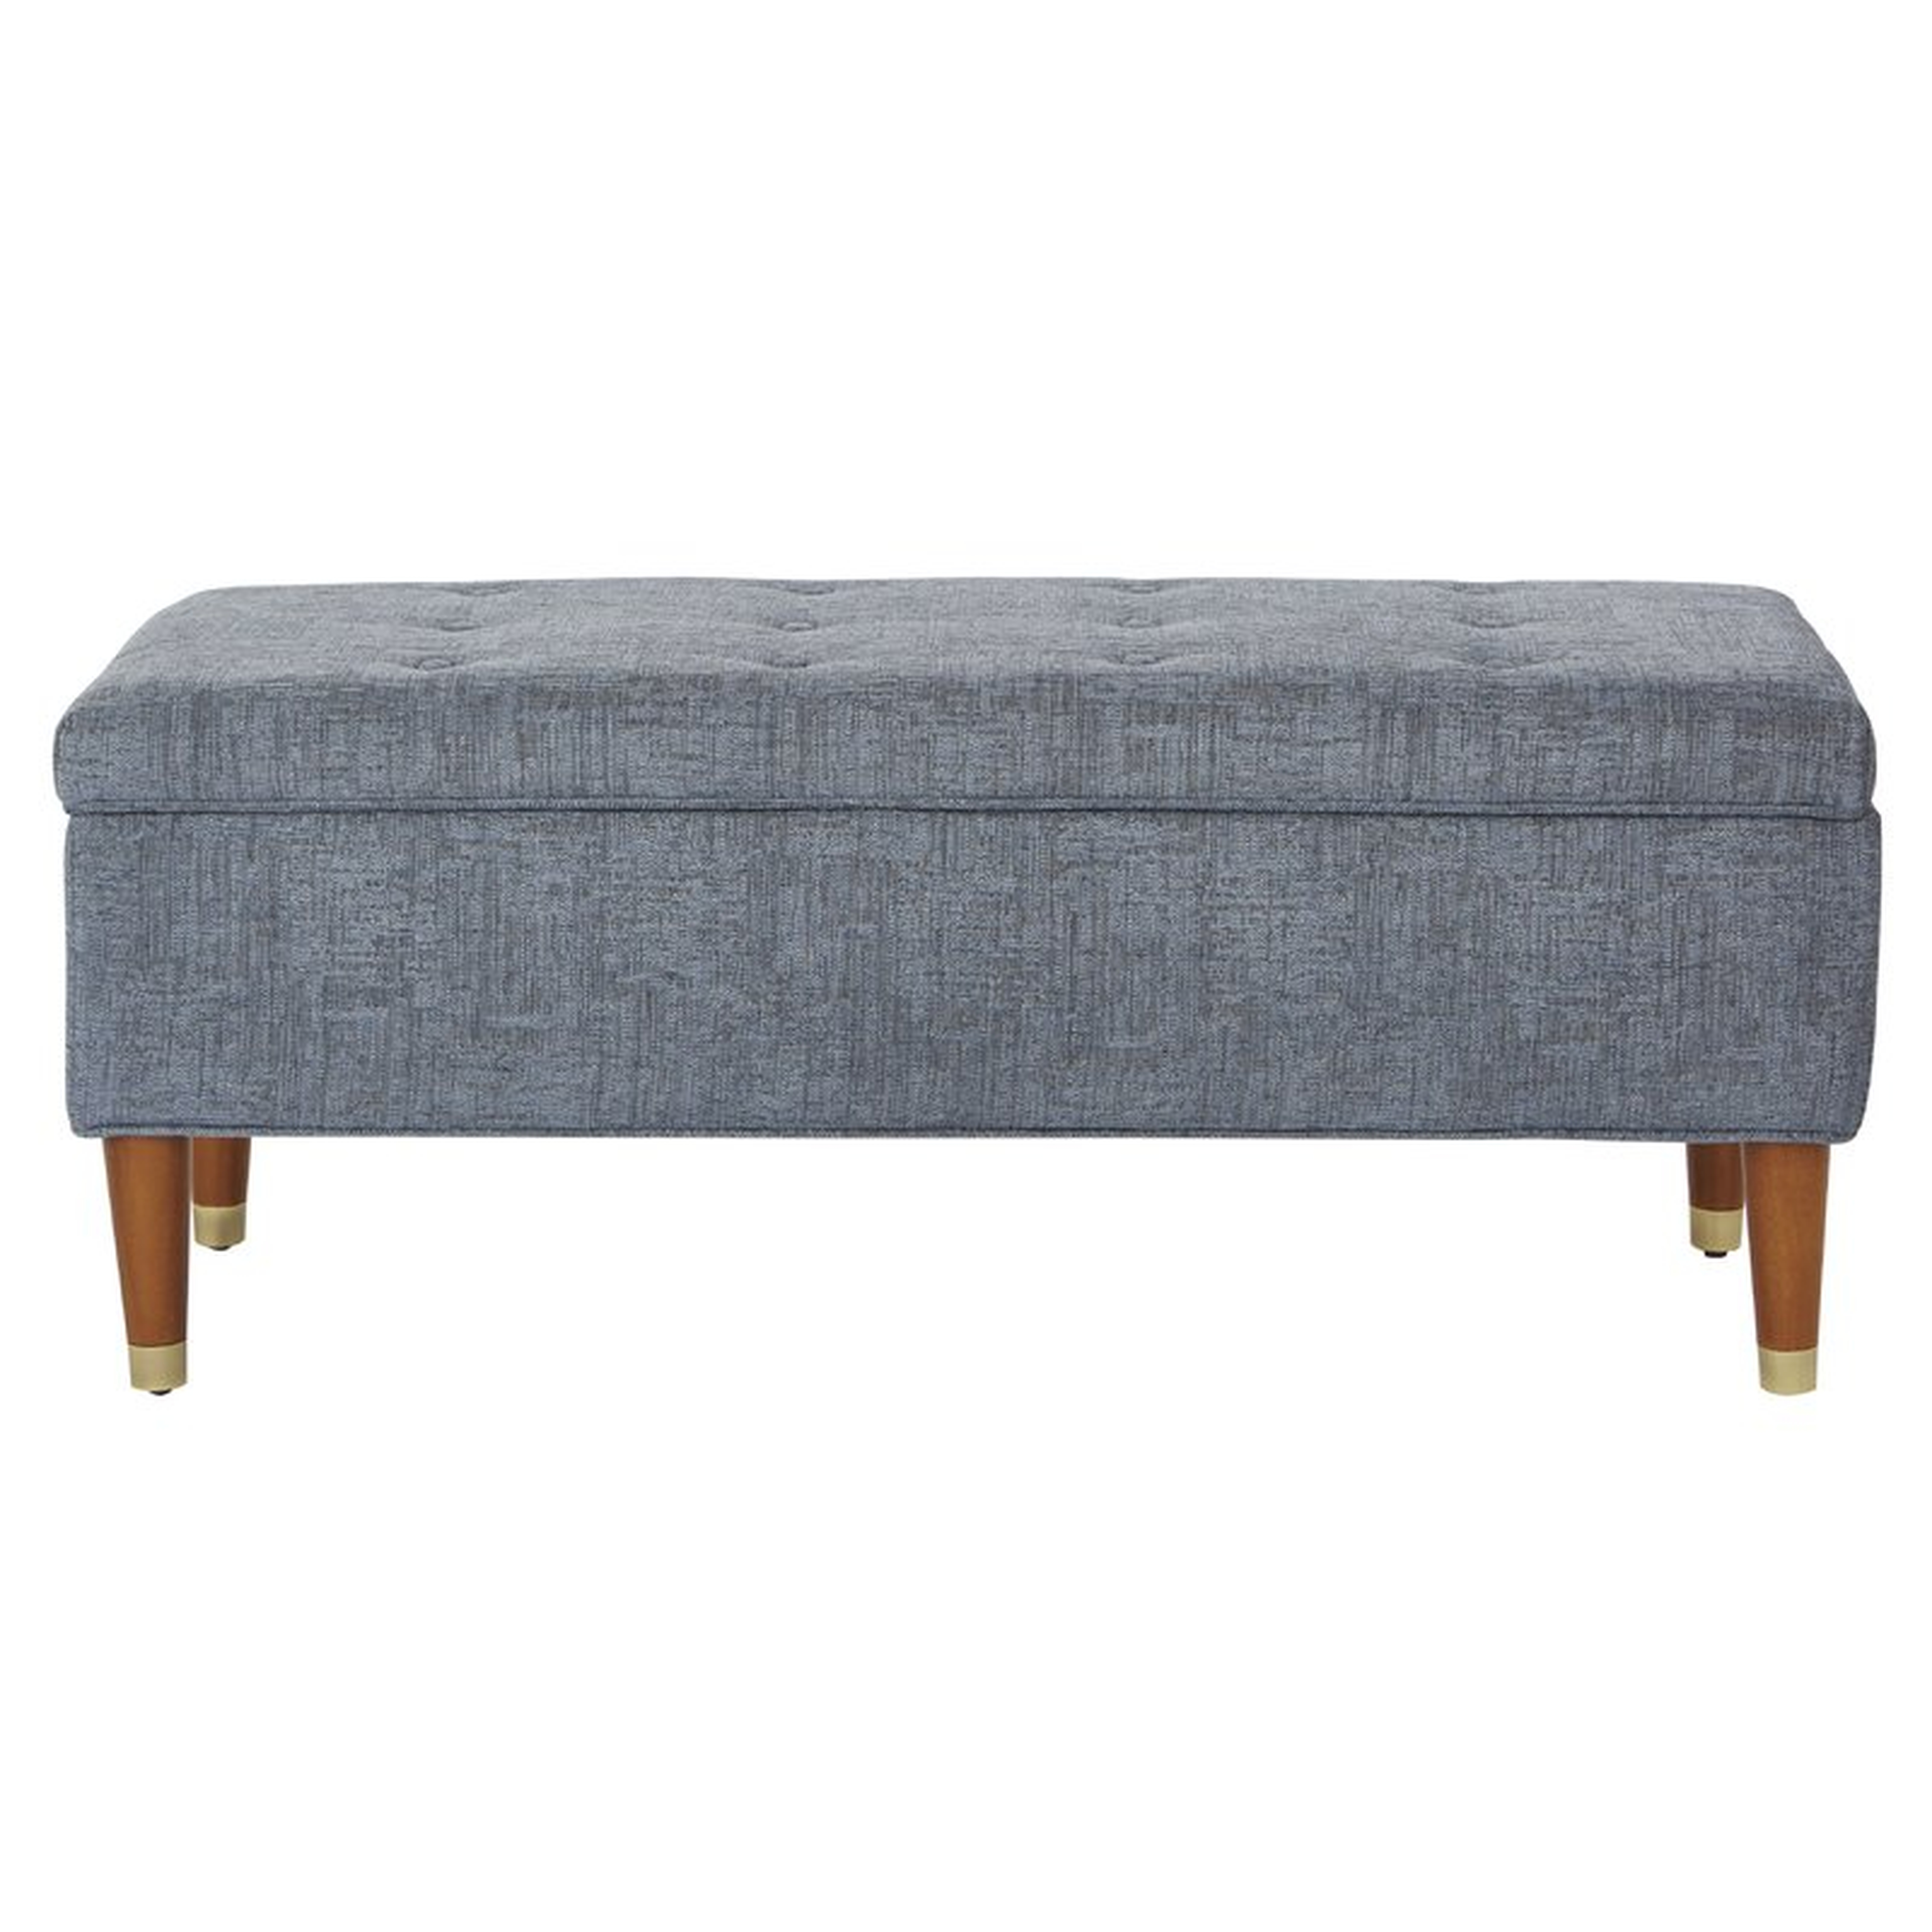 Rizer Upholstered Storage Bench - Wayfair